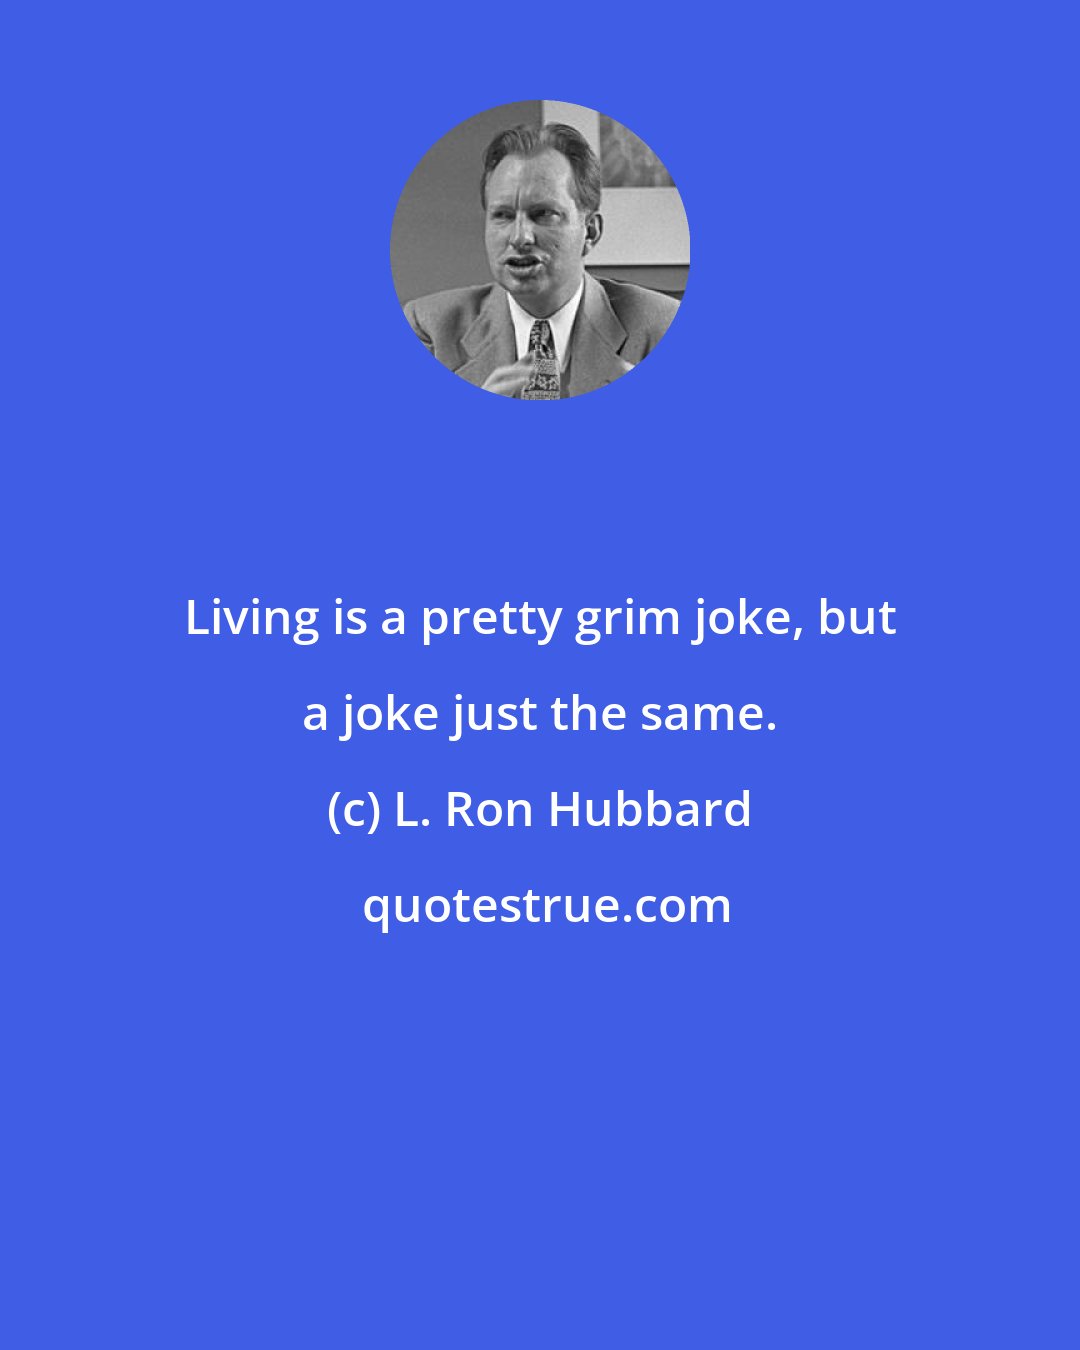 L. Ron Hubbard: Living is a pretty grim joke, but a joke just the same.